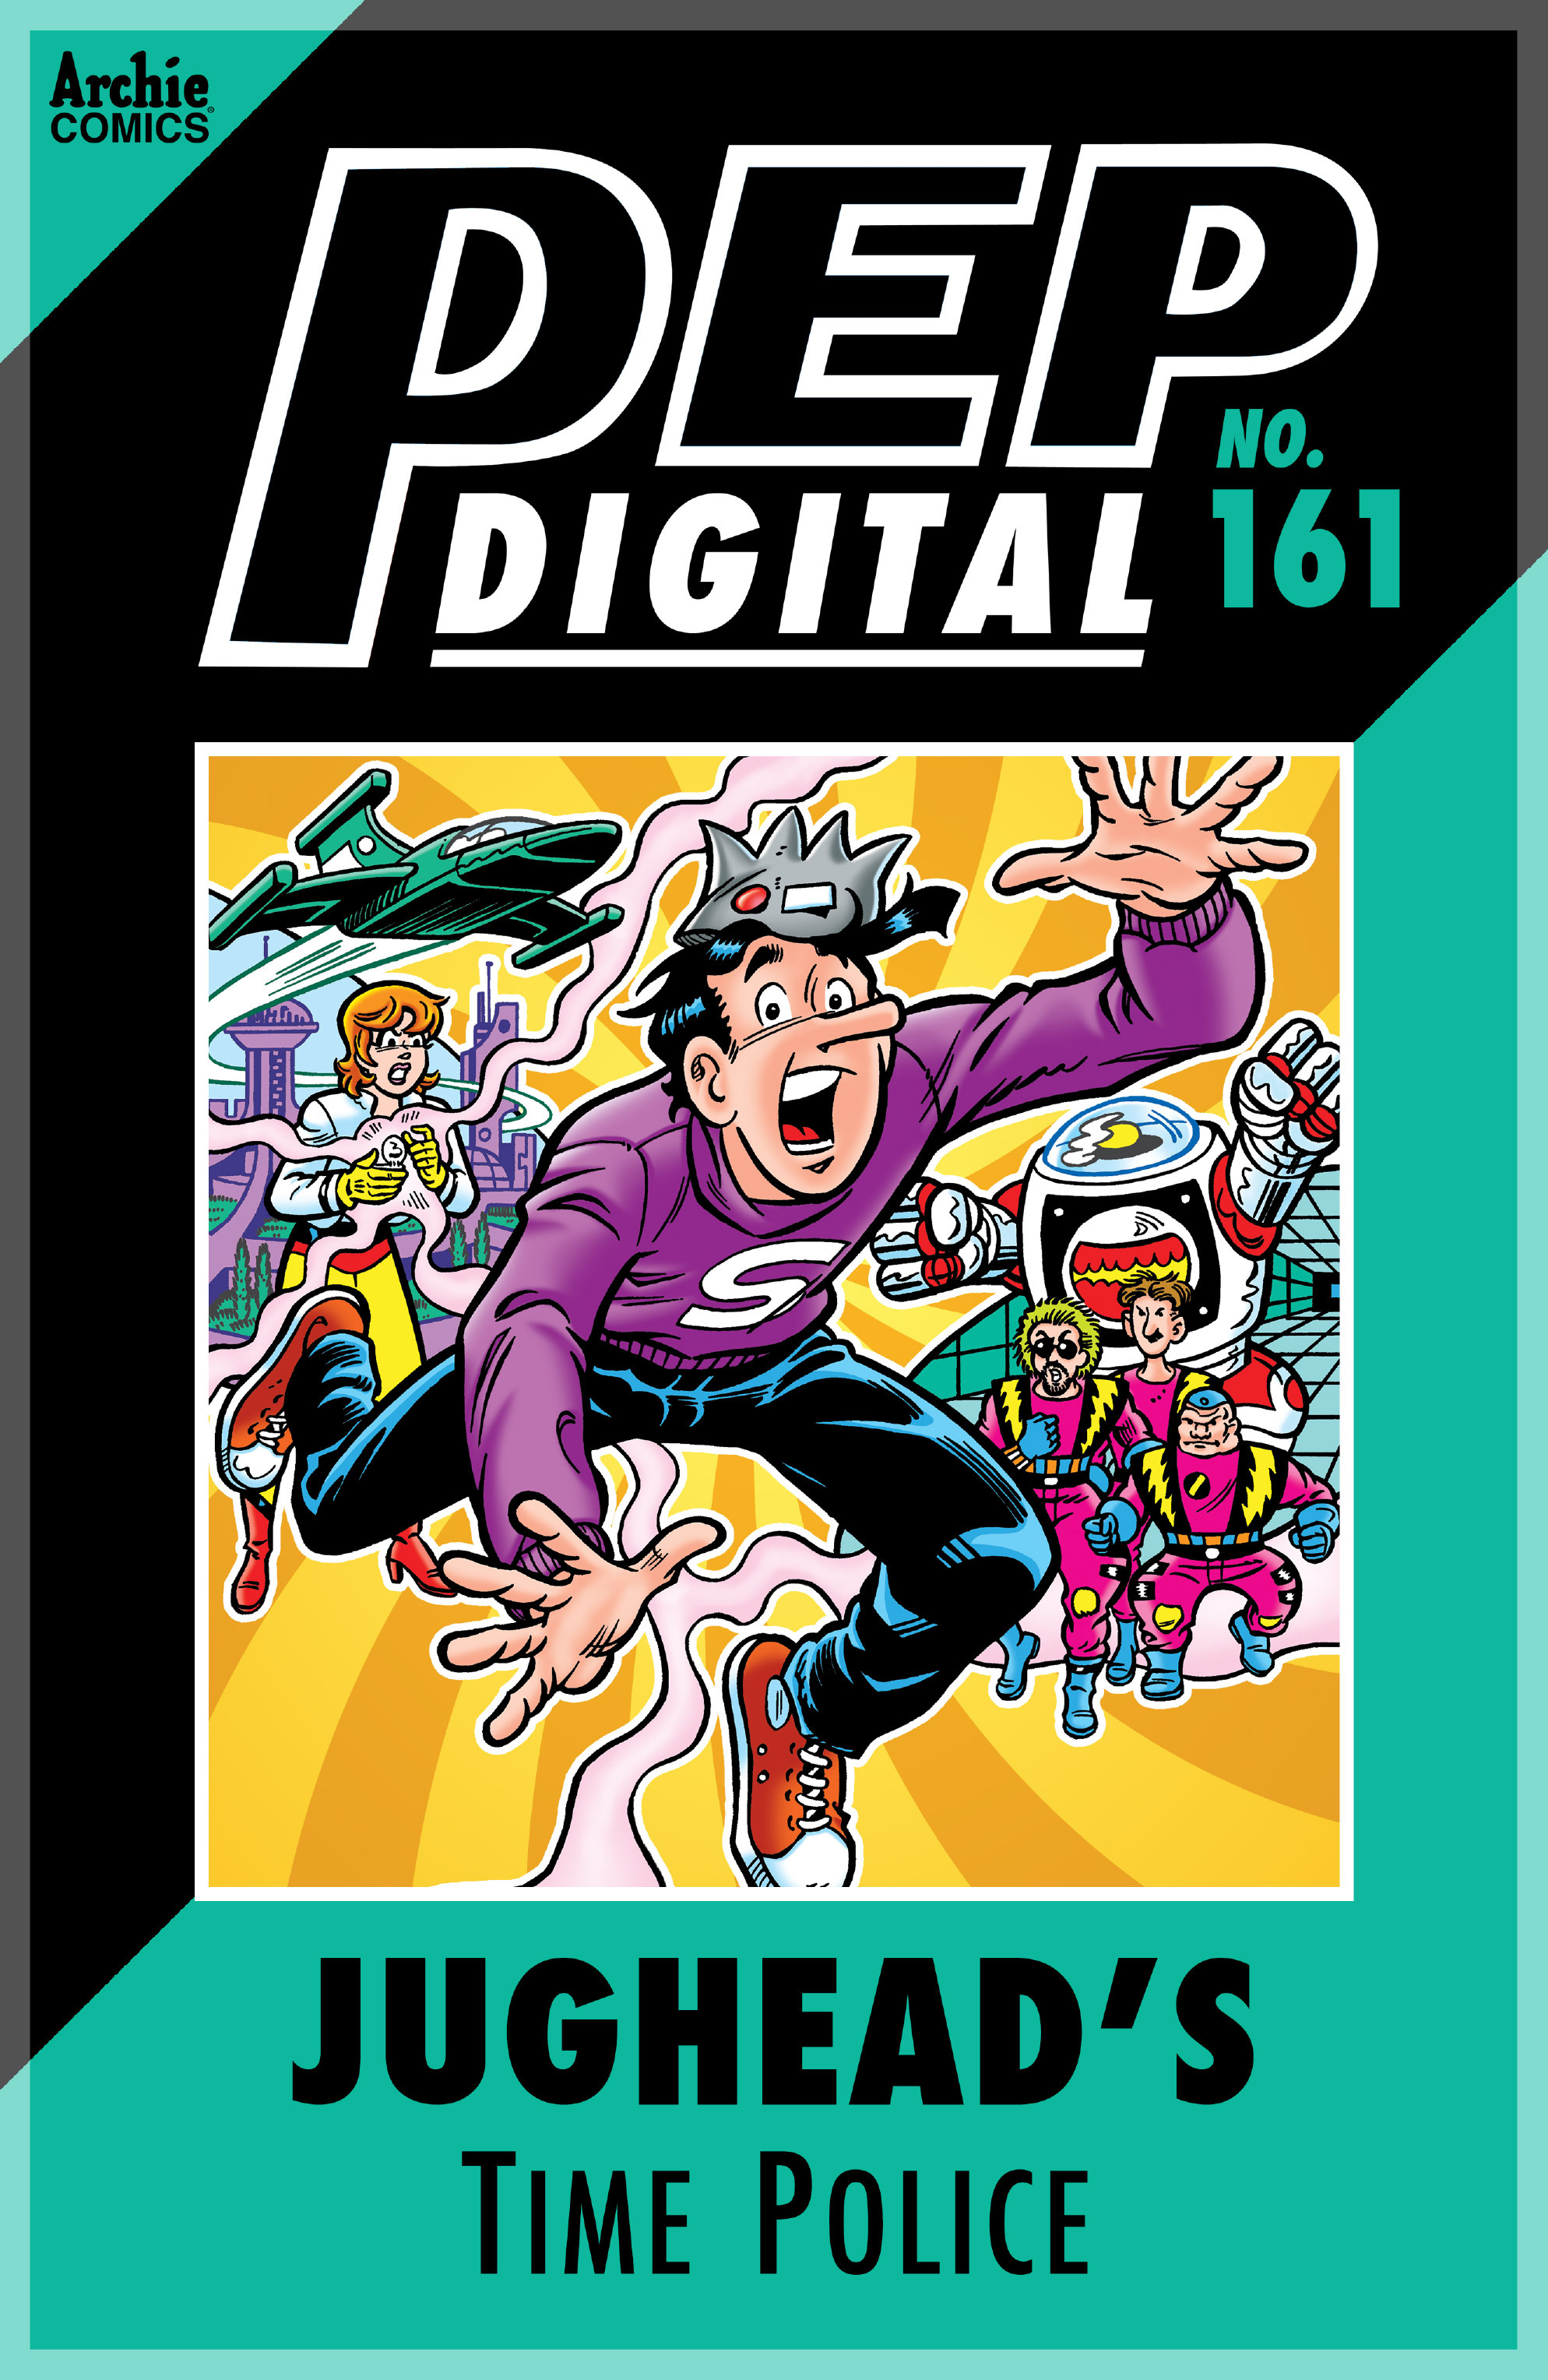 Read online Pep Digital comic -  Issue #161 - 1